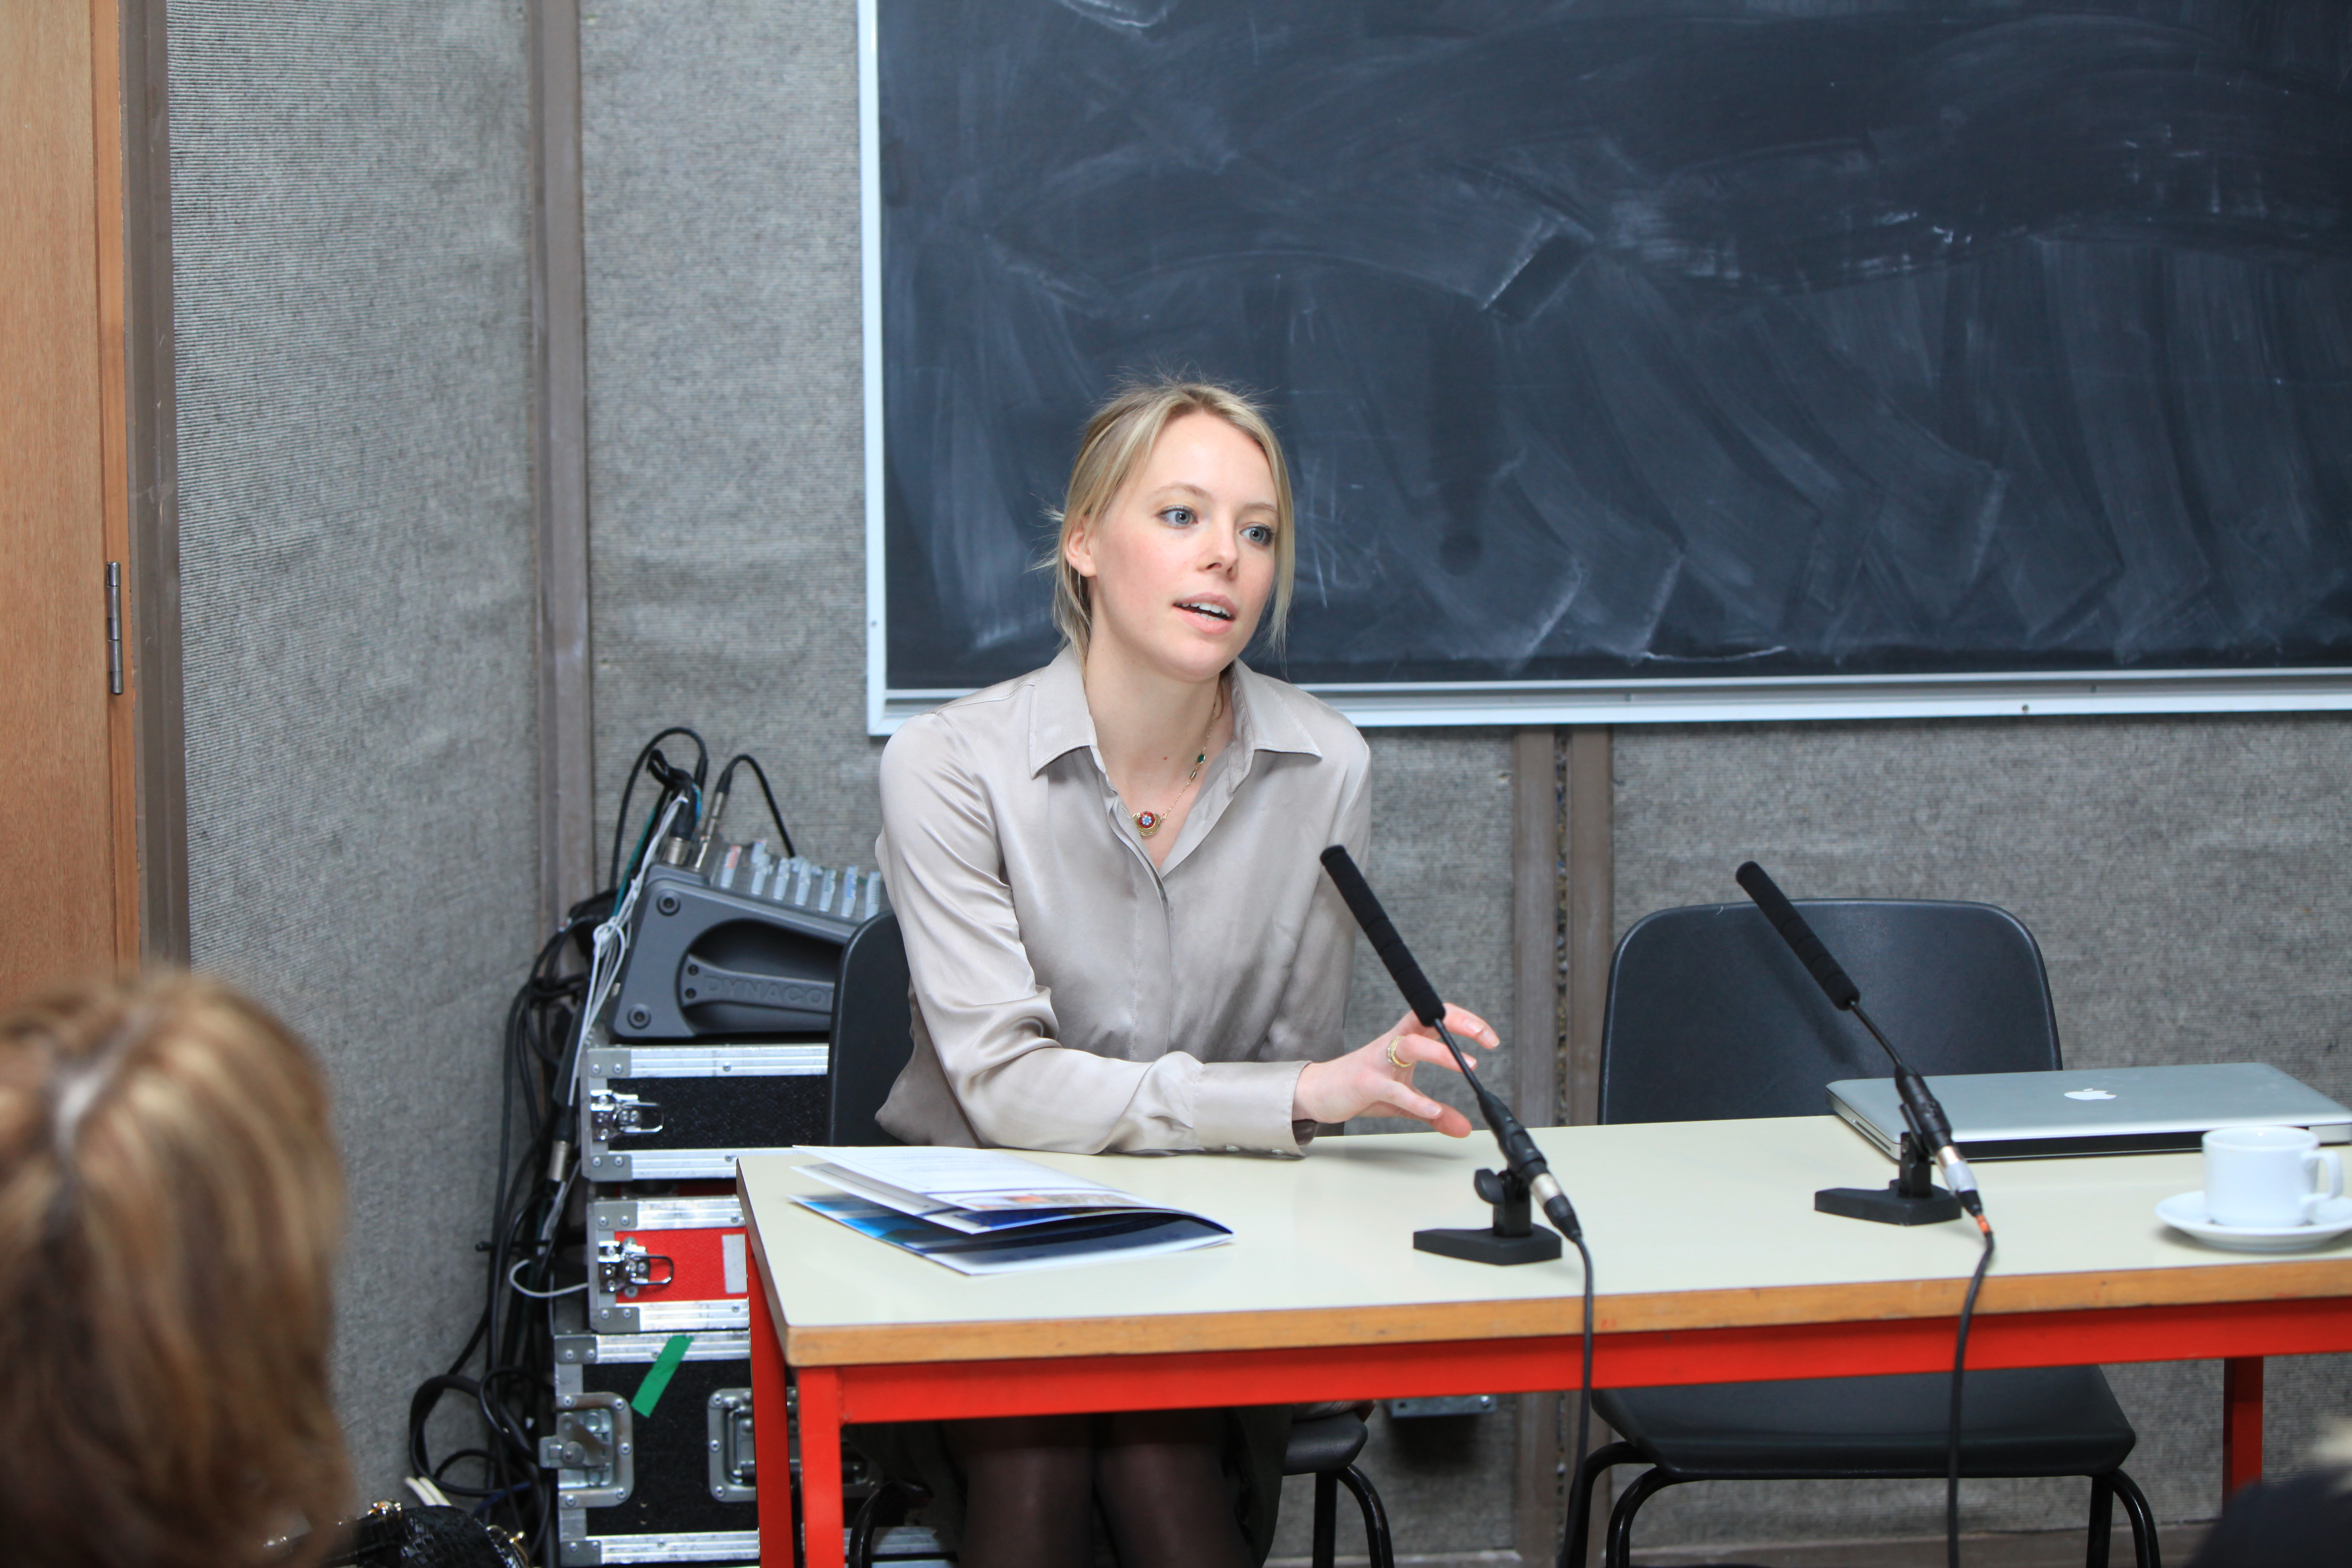 Ms. Erika Widegren, Executive Director of Atomium Culture